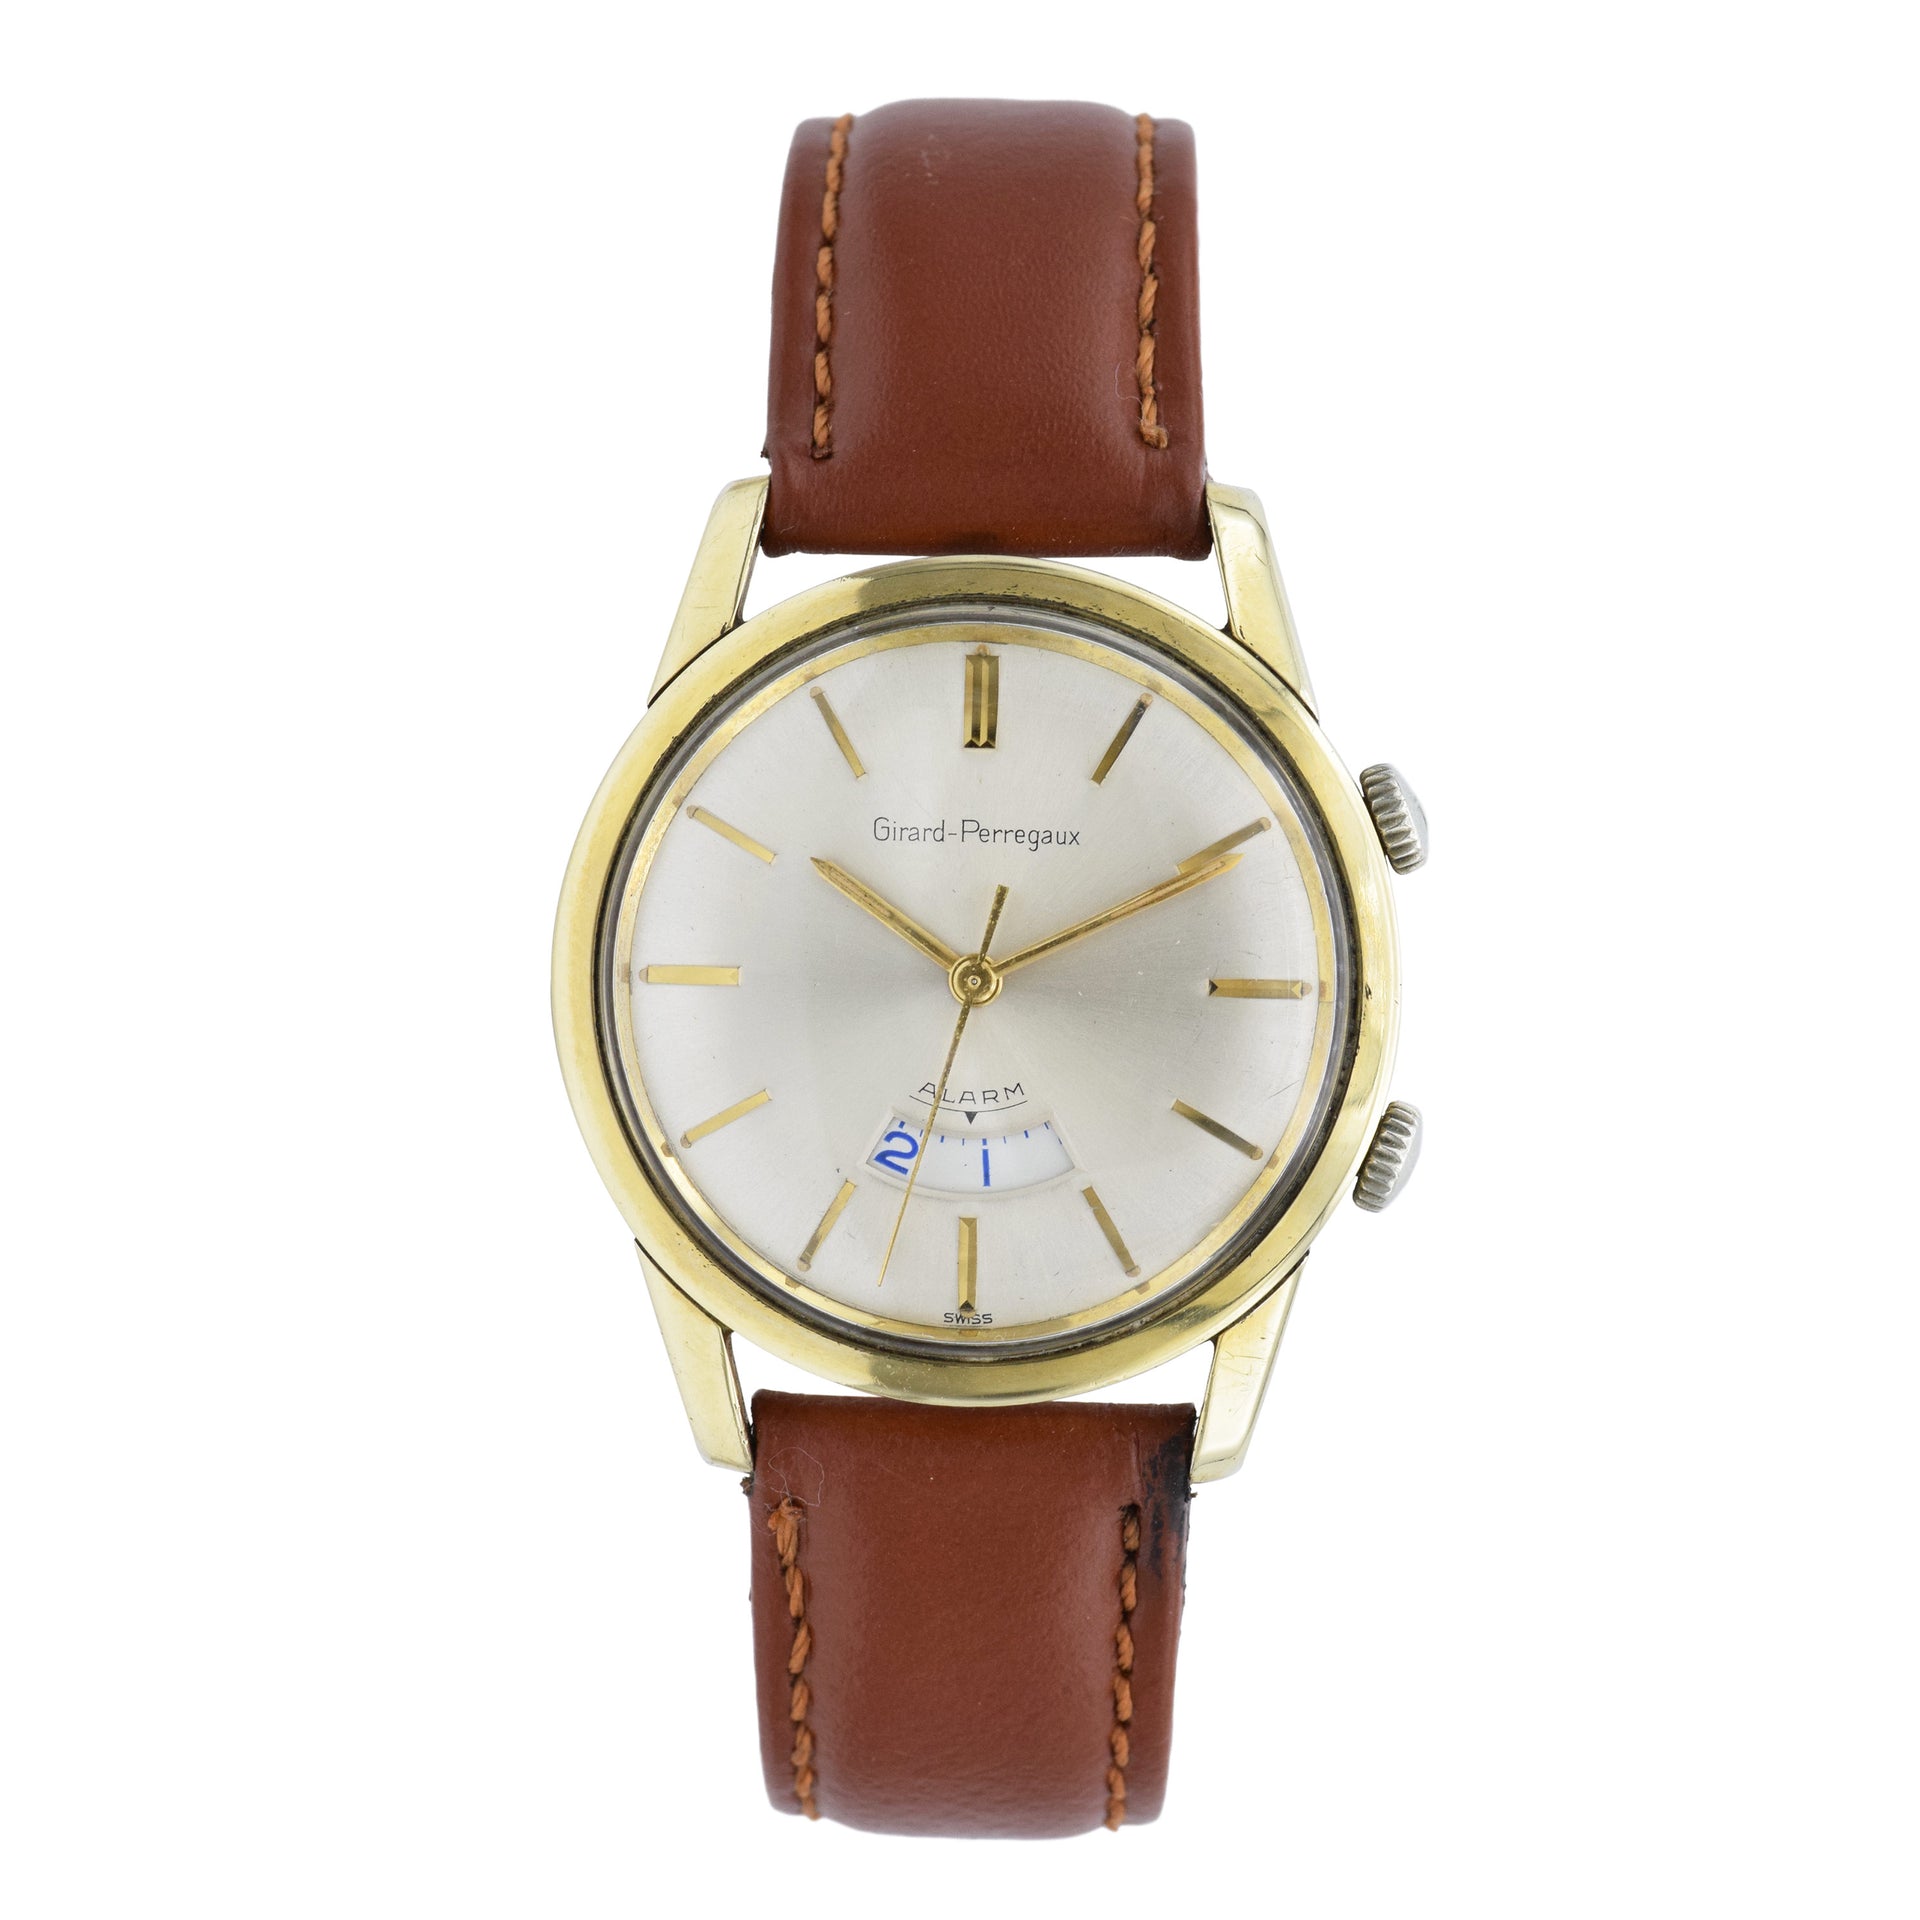 Vintage 1960s Girard-Perregaux Alarm Watch